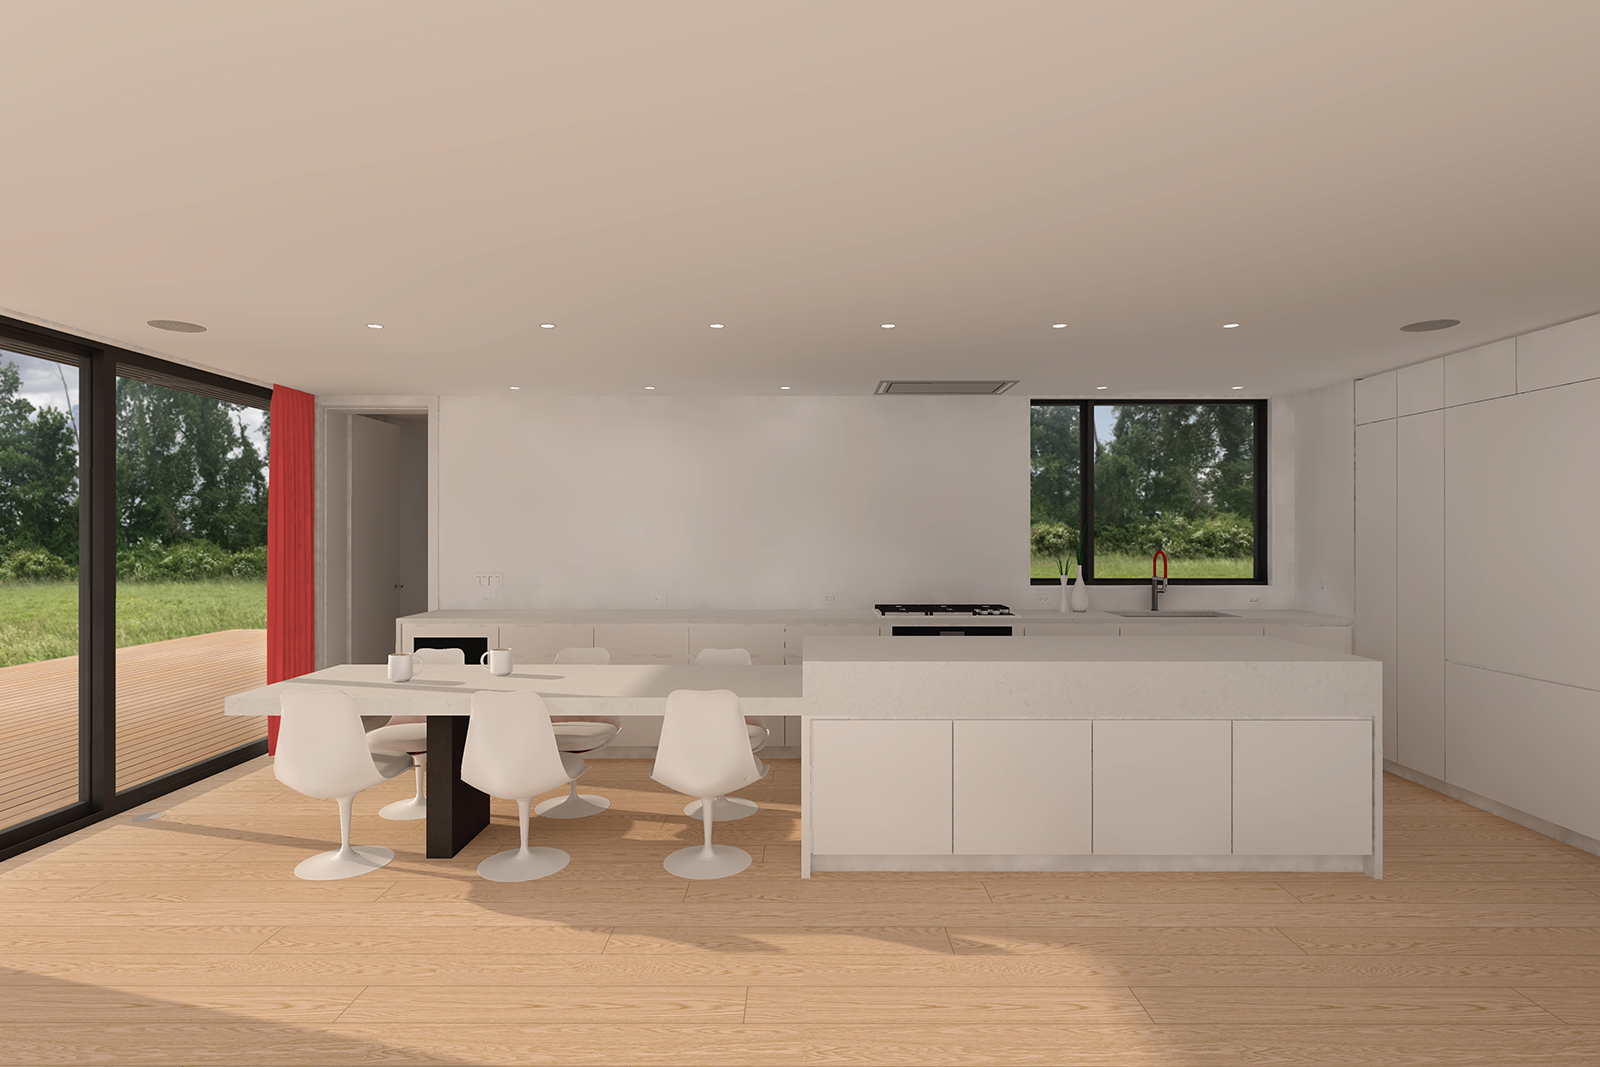 res4-resolution-4-architecture-modern-modular-prefab-sharon-ridge-residence-rendering-interior-perspective-dining kitchen.jpg